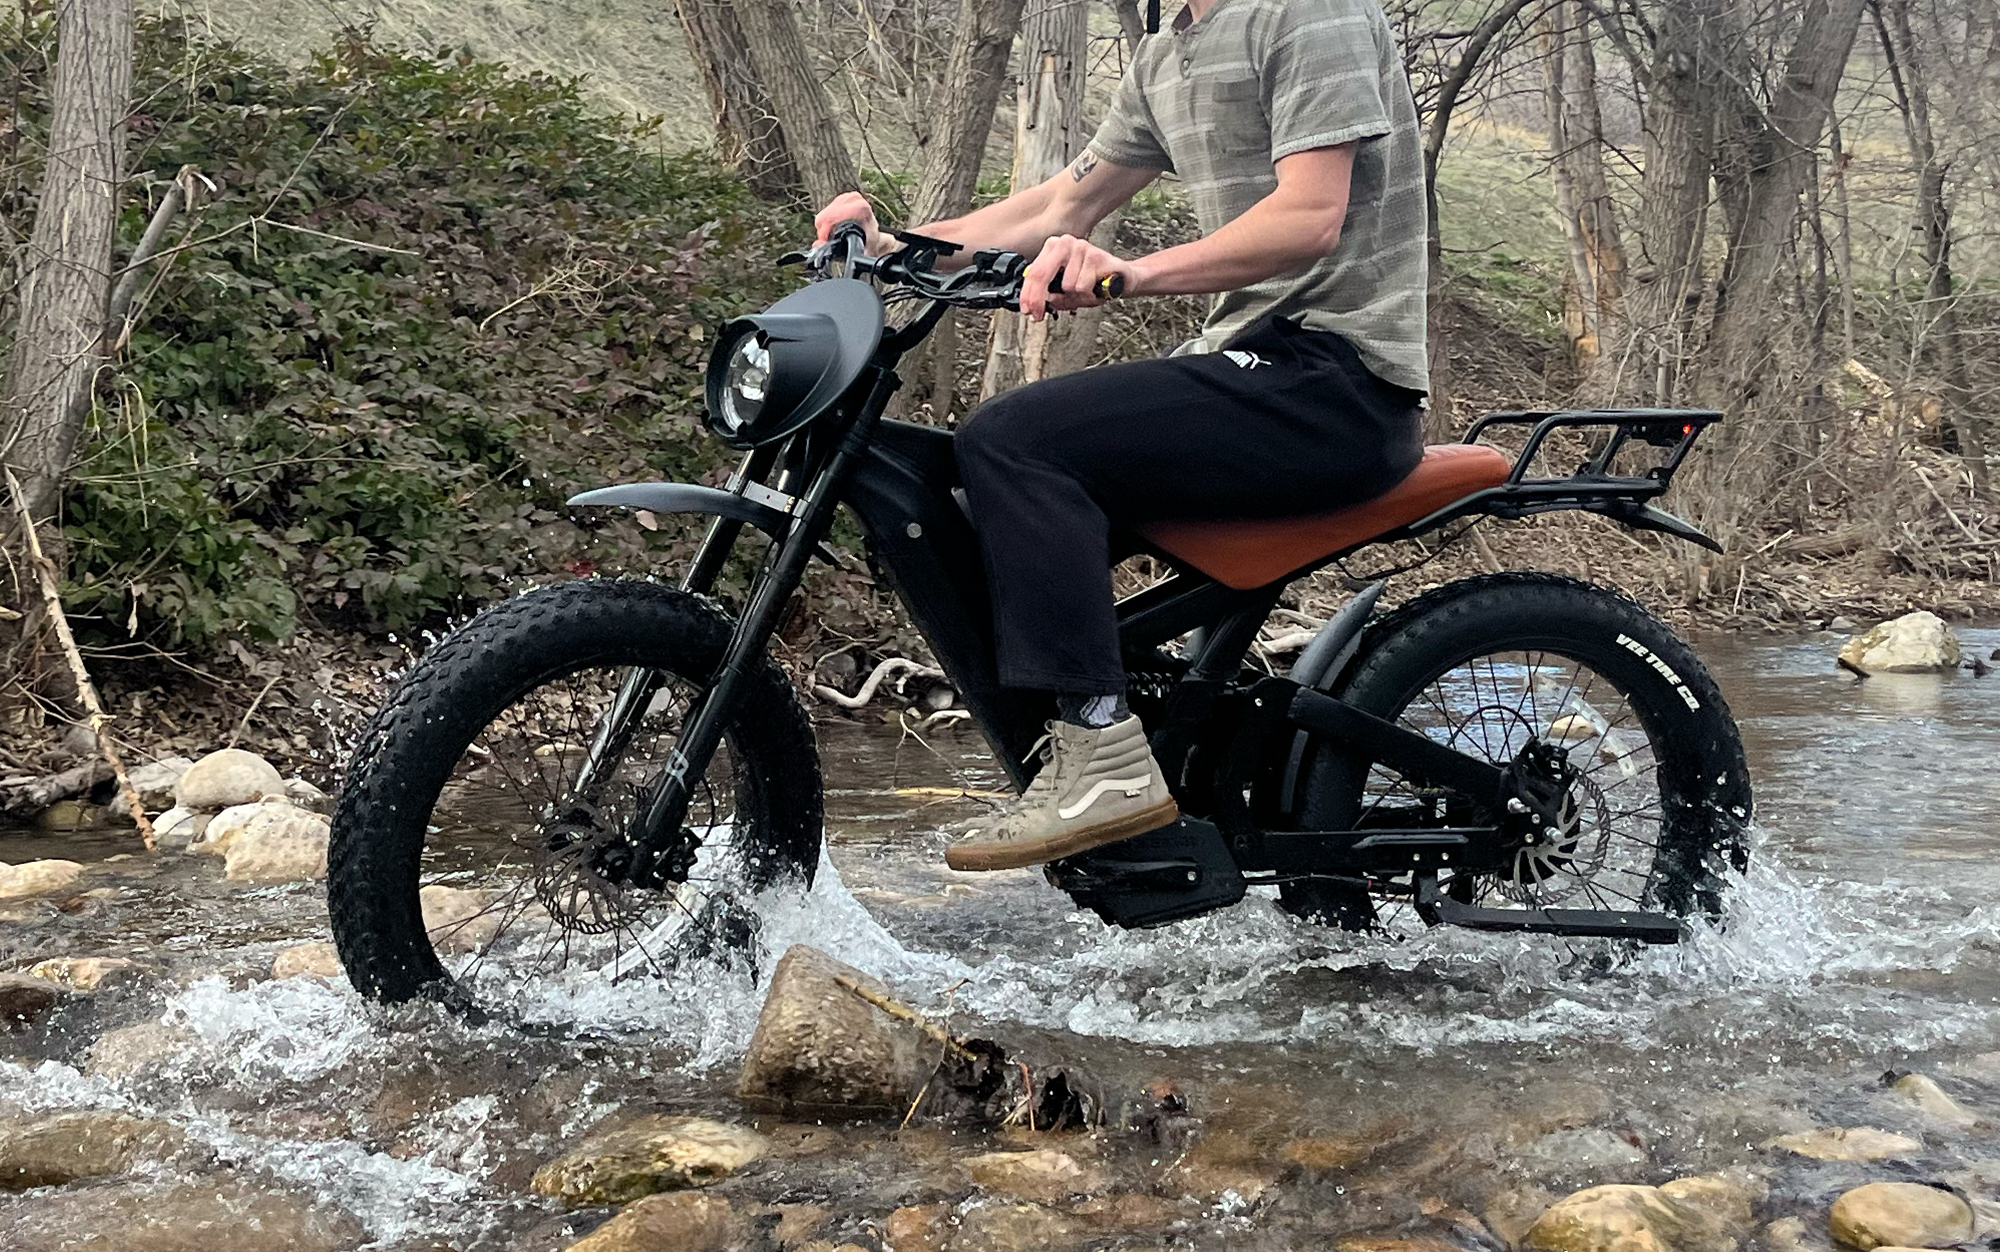 Tester rides fat tire electric bike over stream.